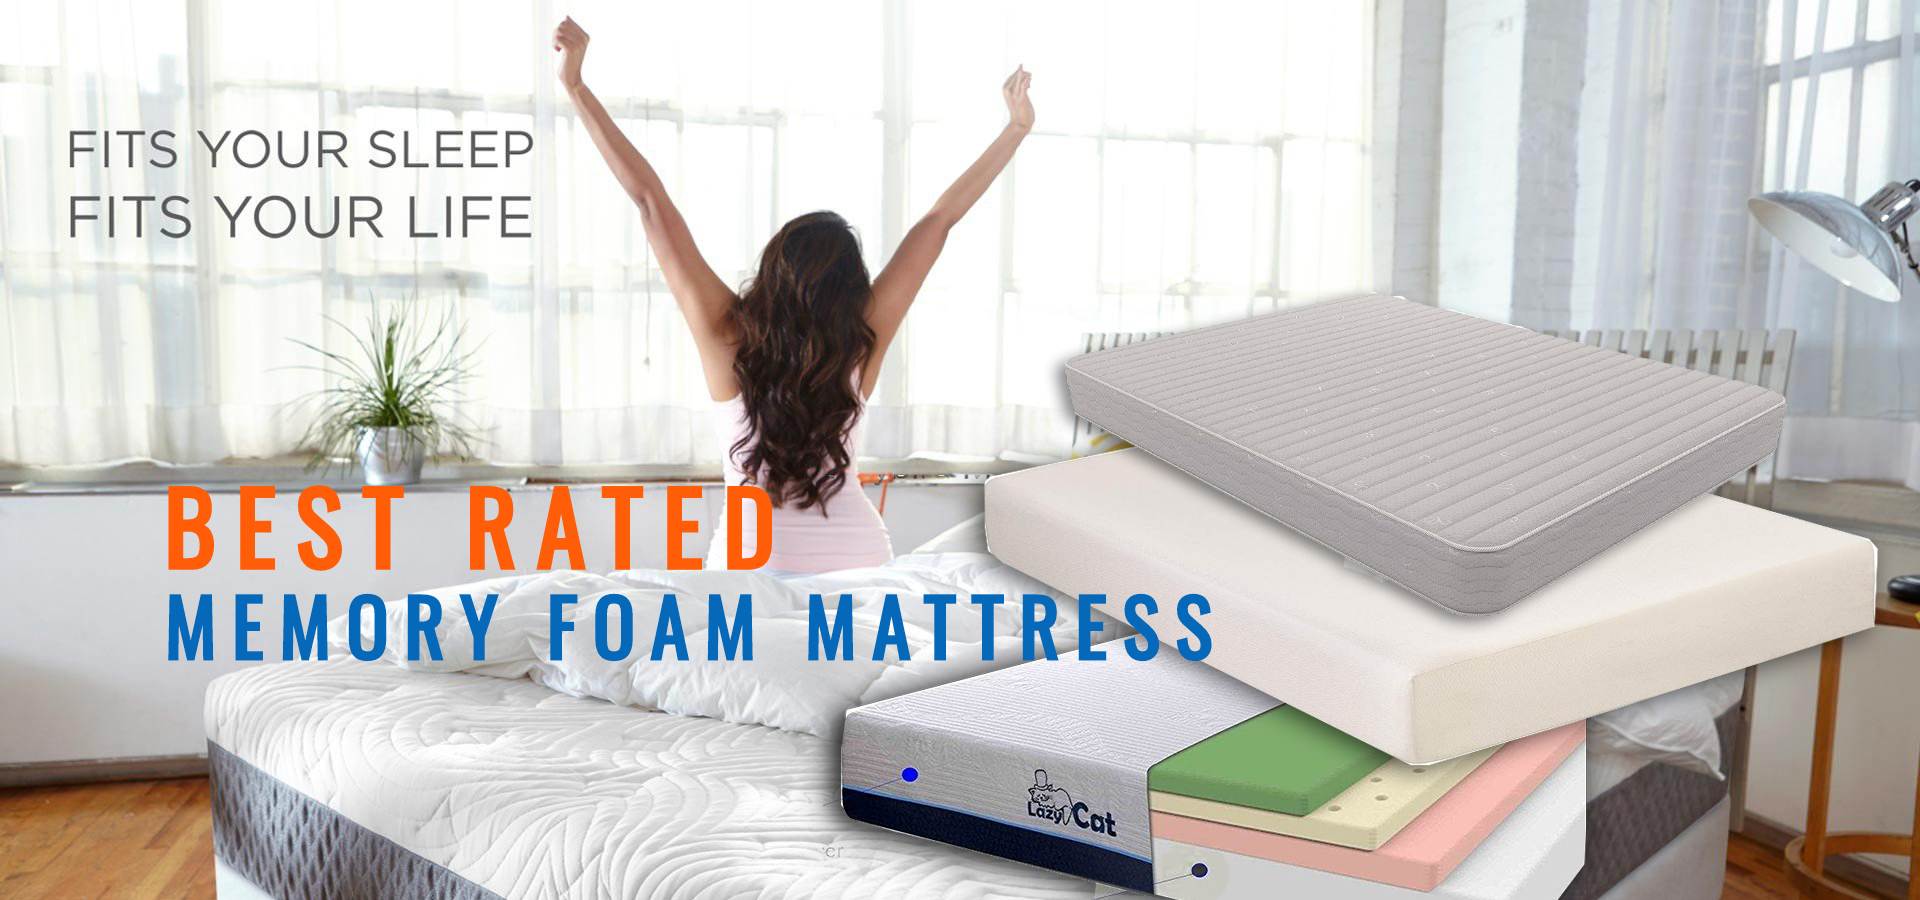 Best Rated momory foam mattress